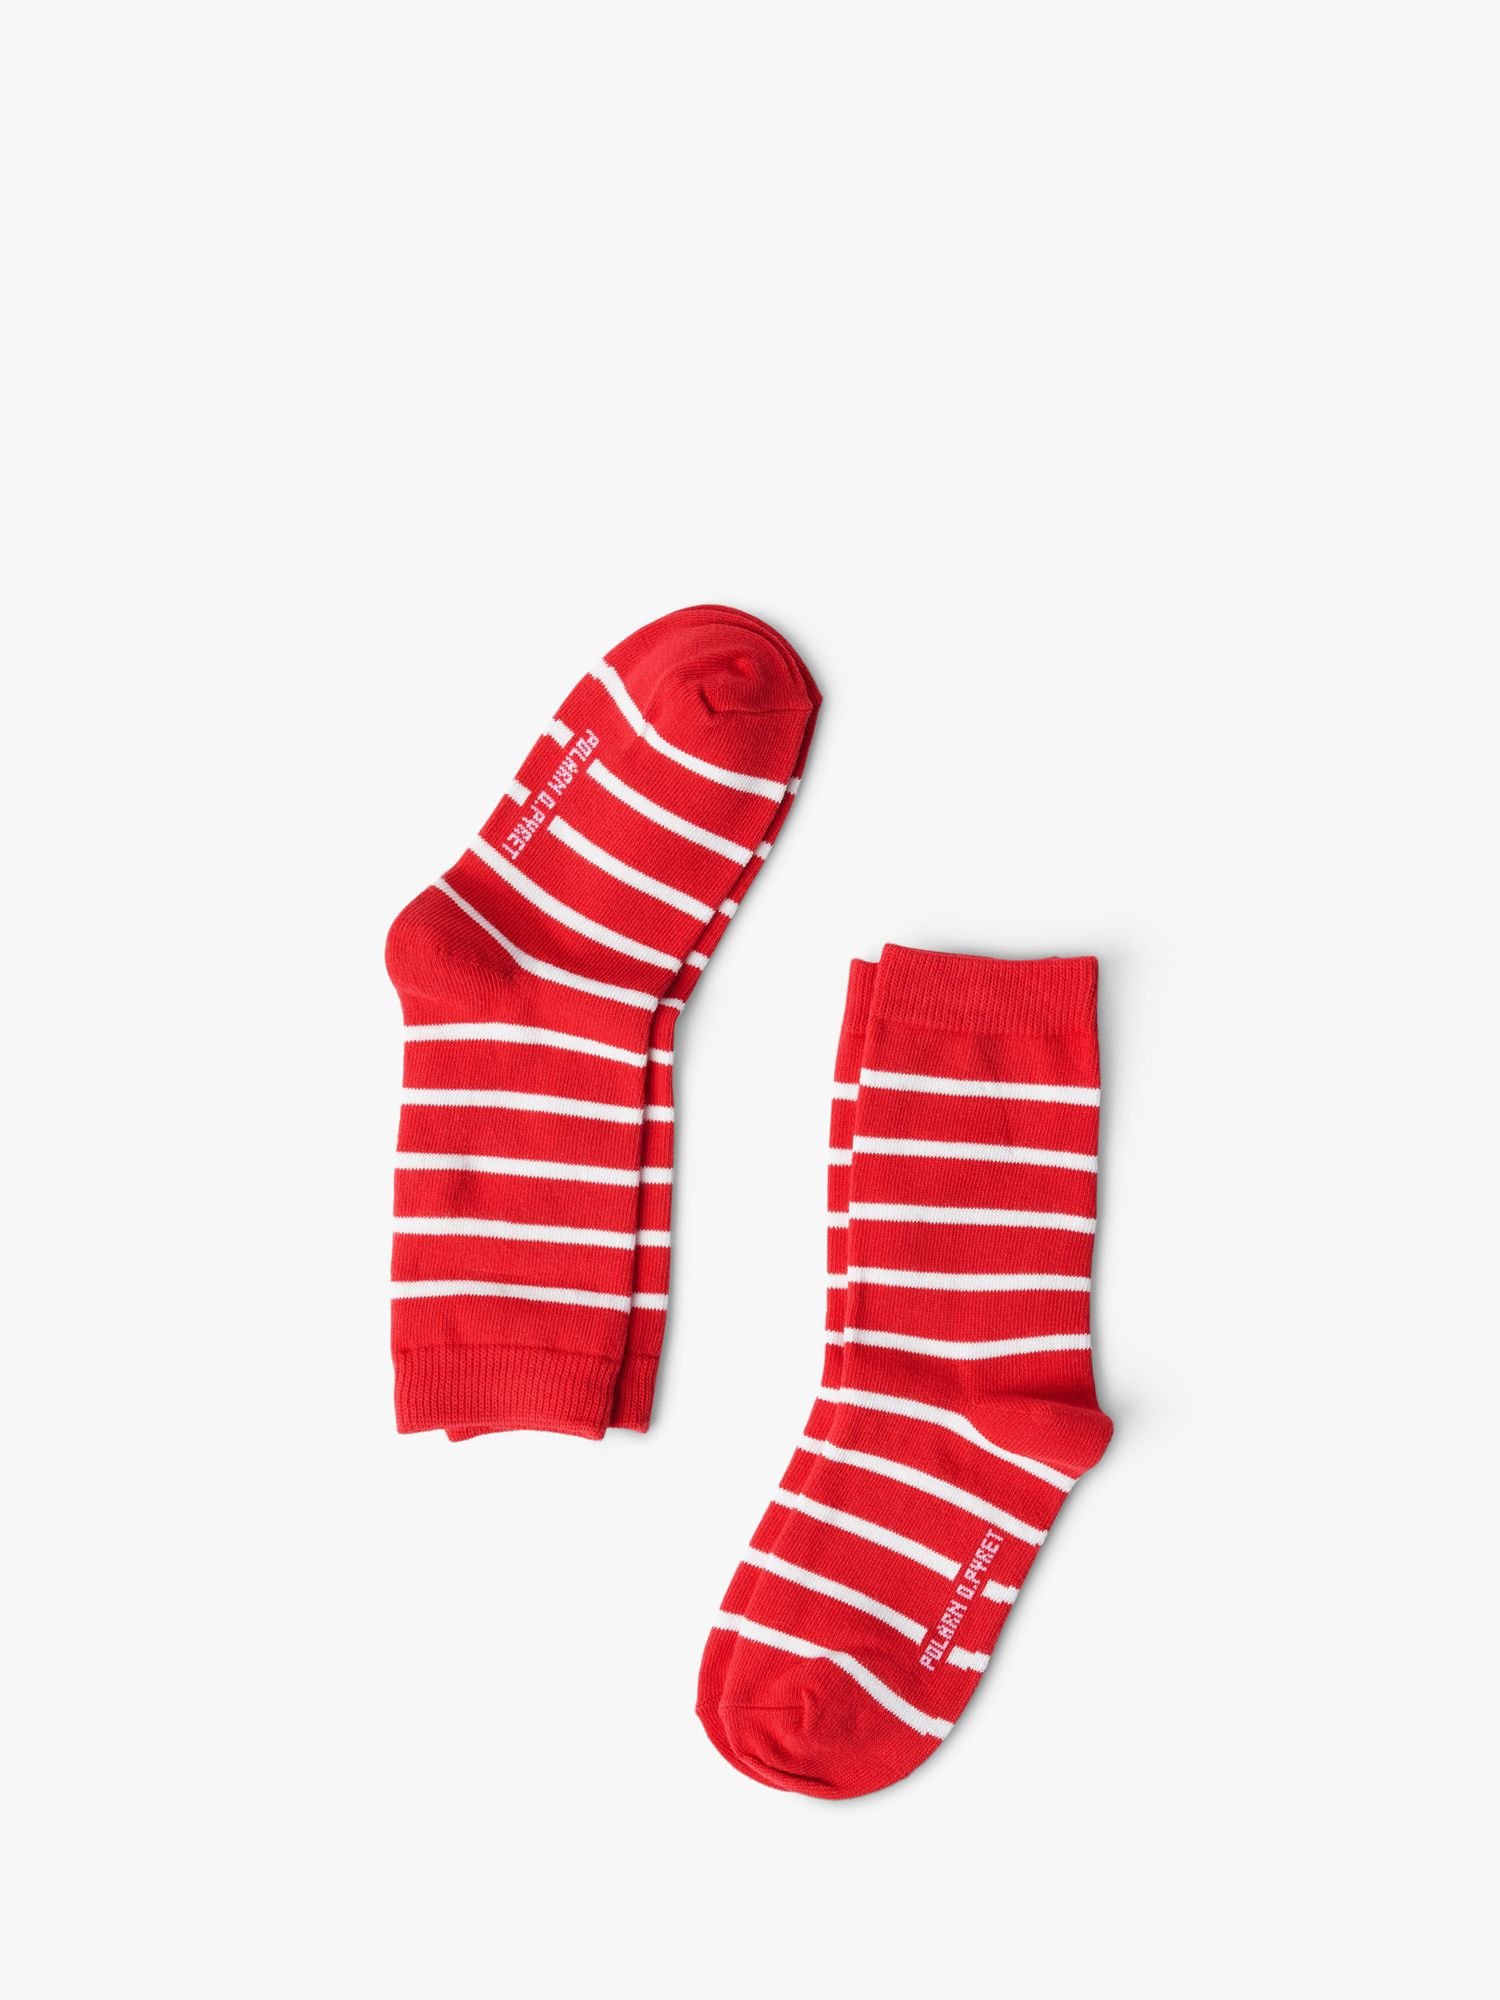 Polarn O. Pyret Kids' Organic Cotton Blend Stripe Socks, Pack of 2, Red, 6-8 years